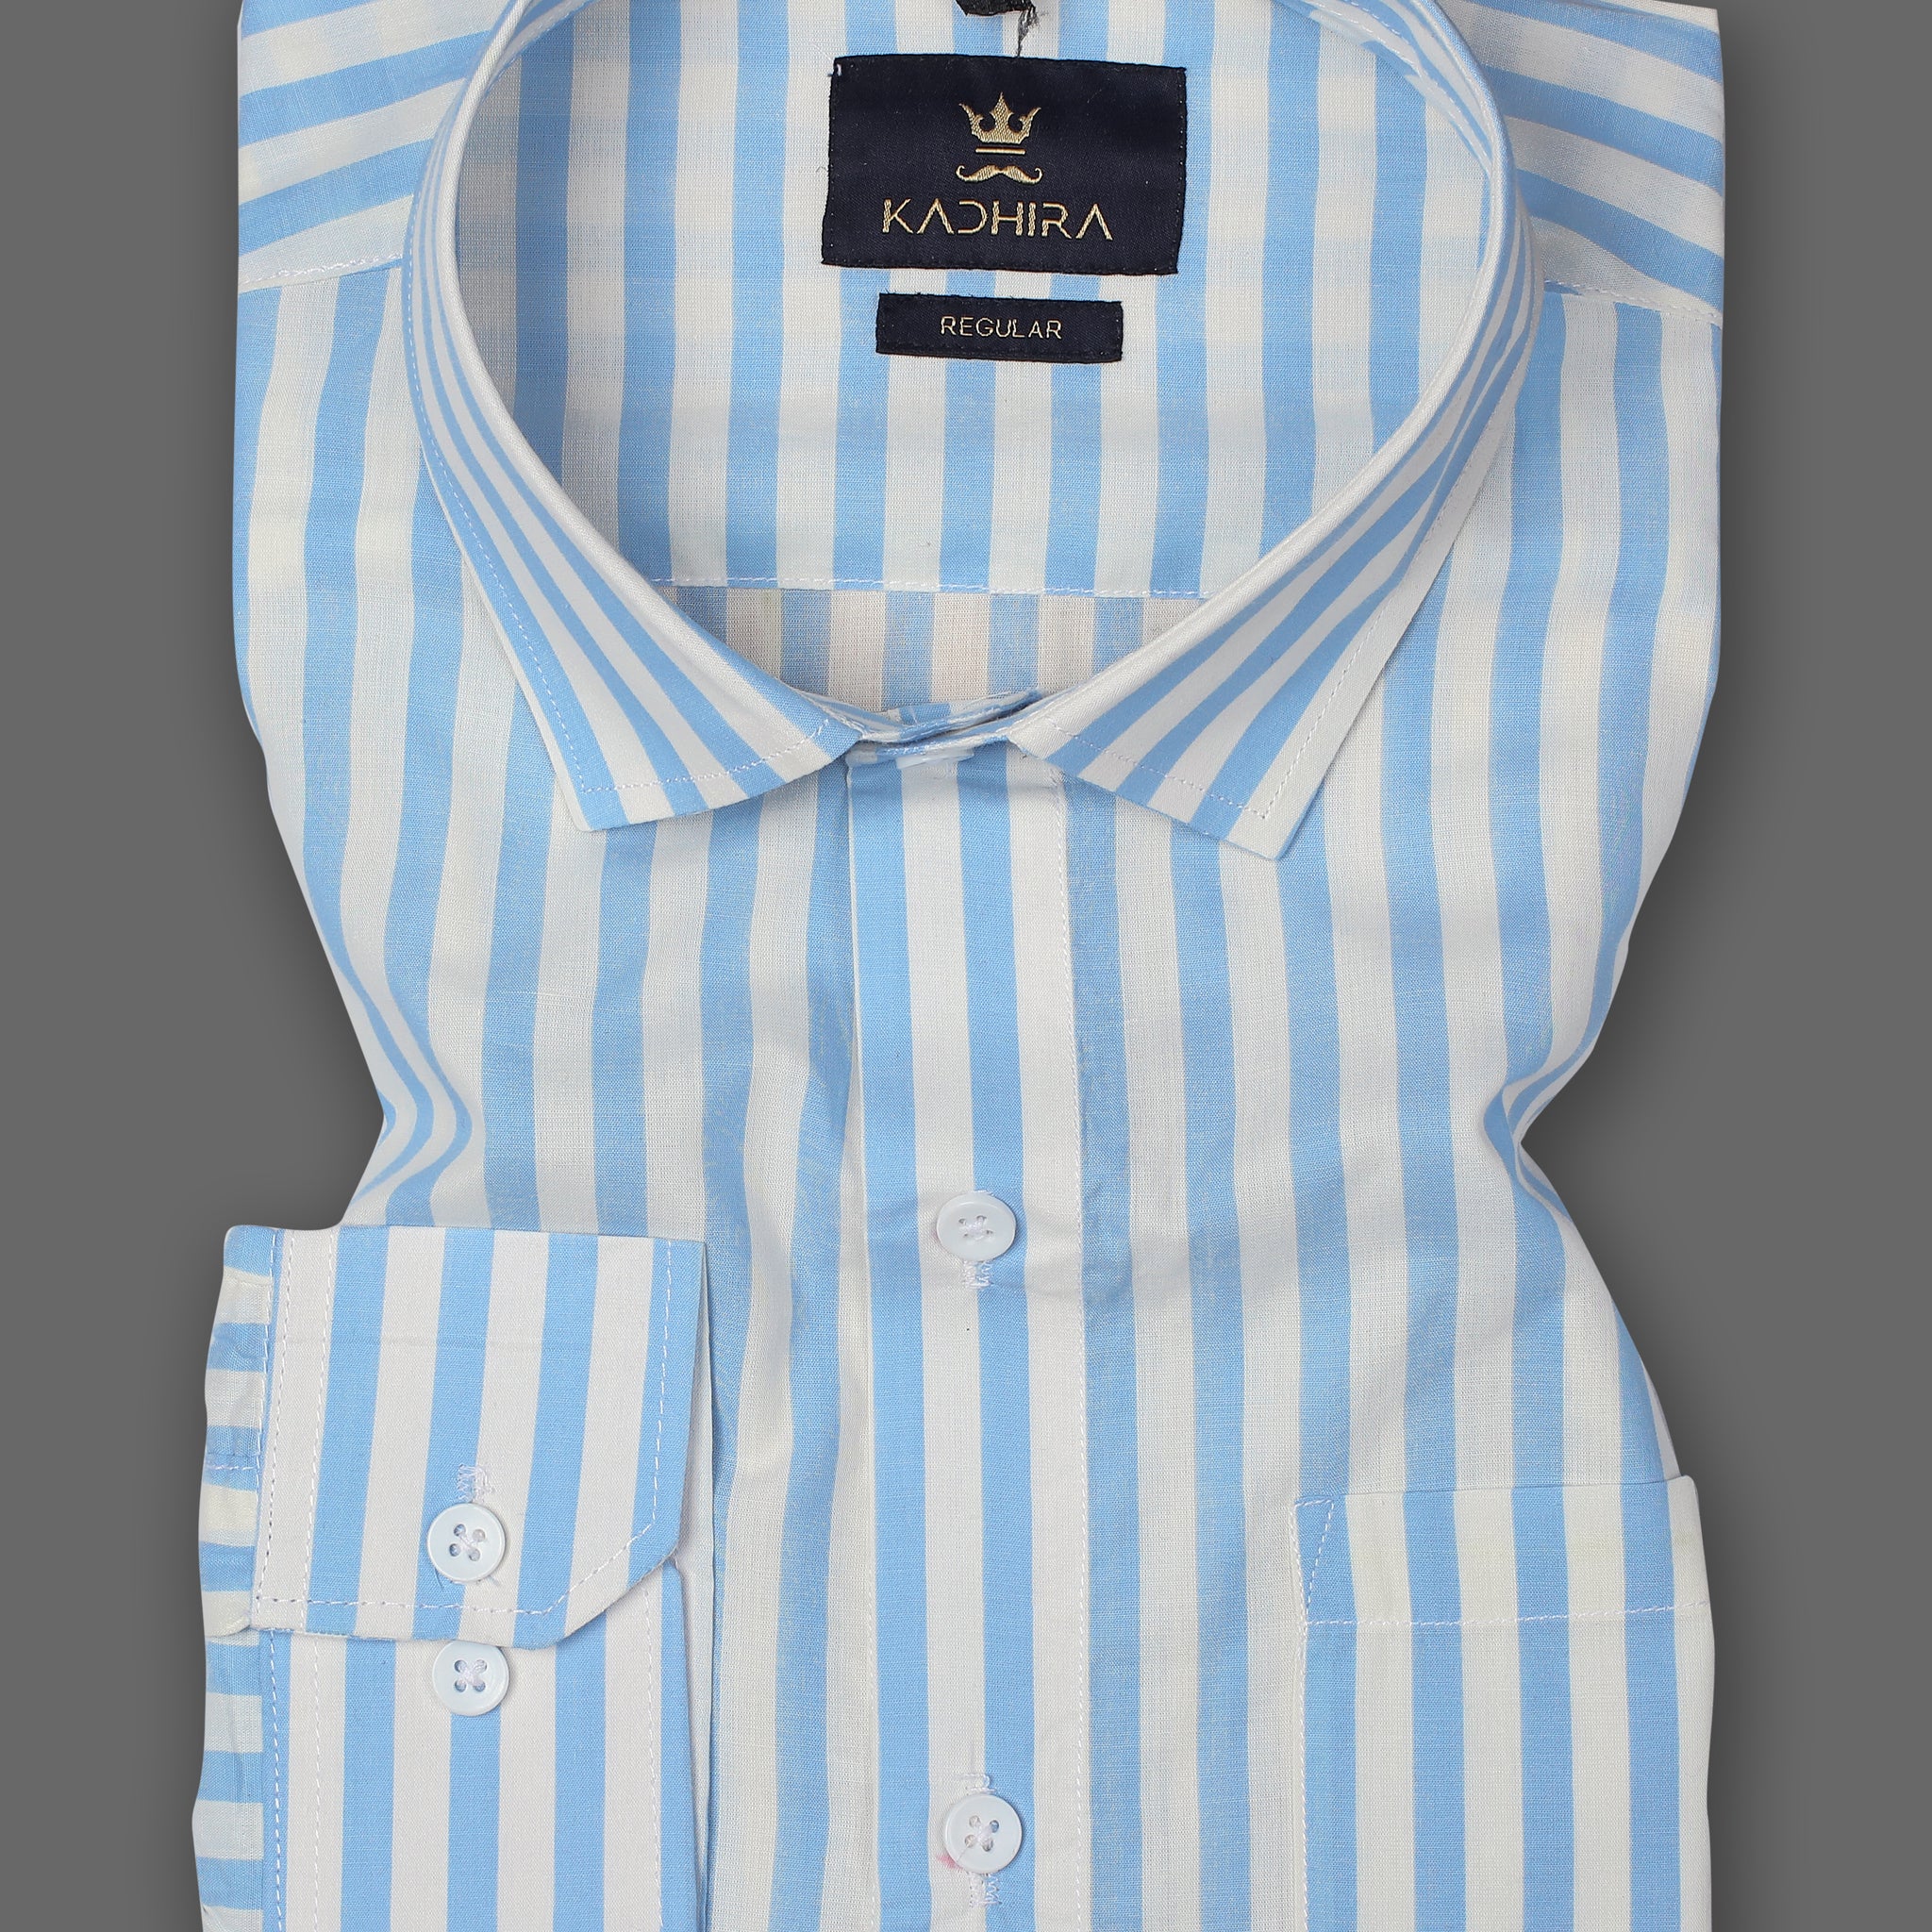 Premium Cotton Shirt - White/blue striped - Men